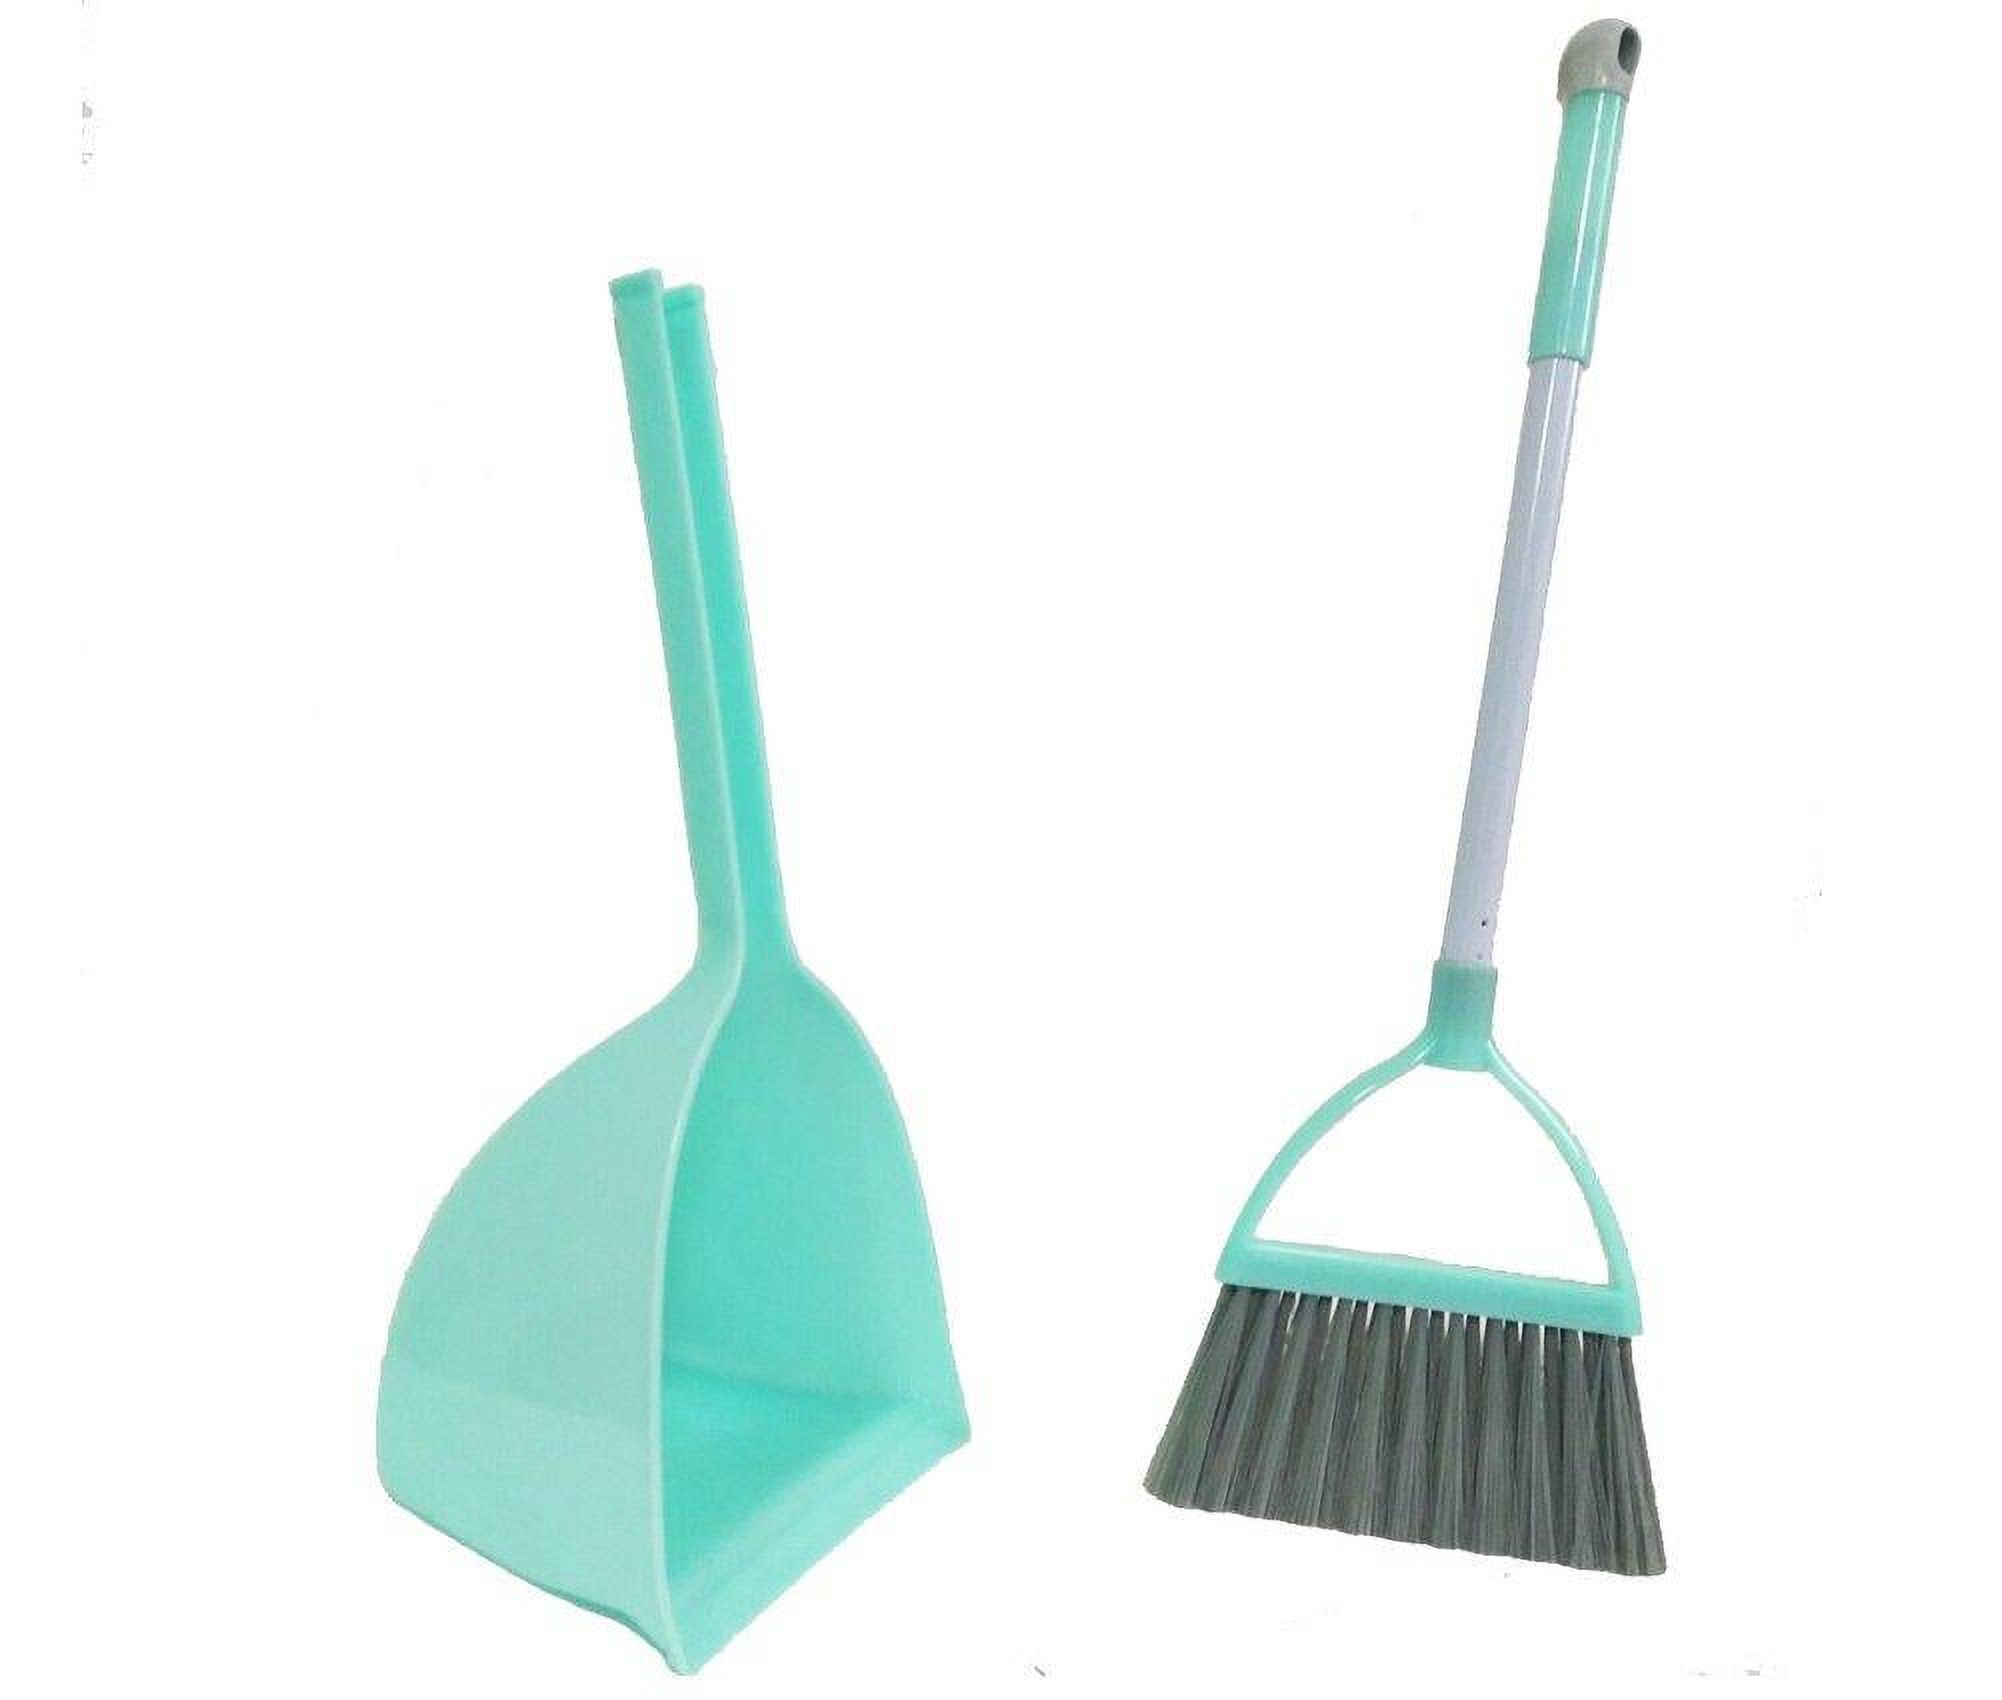 Xifando Kid's Housekeeping Cleaning Tools Set-5pcs,Include Mop,Broom,Dust-pan,Brush,Towel - image 3 of 9